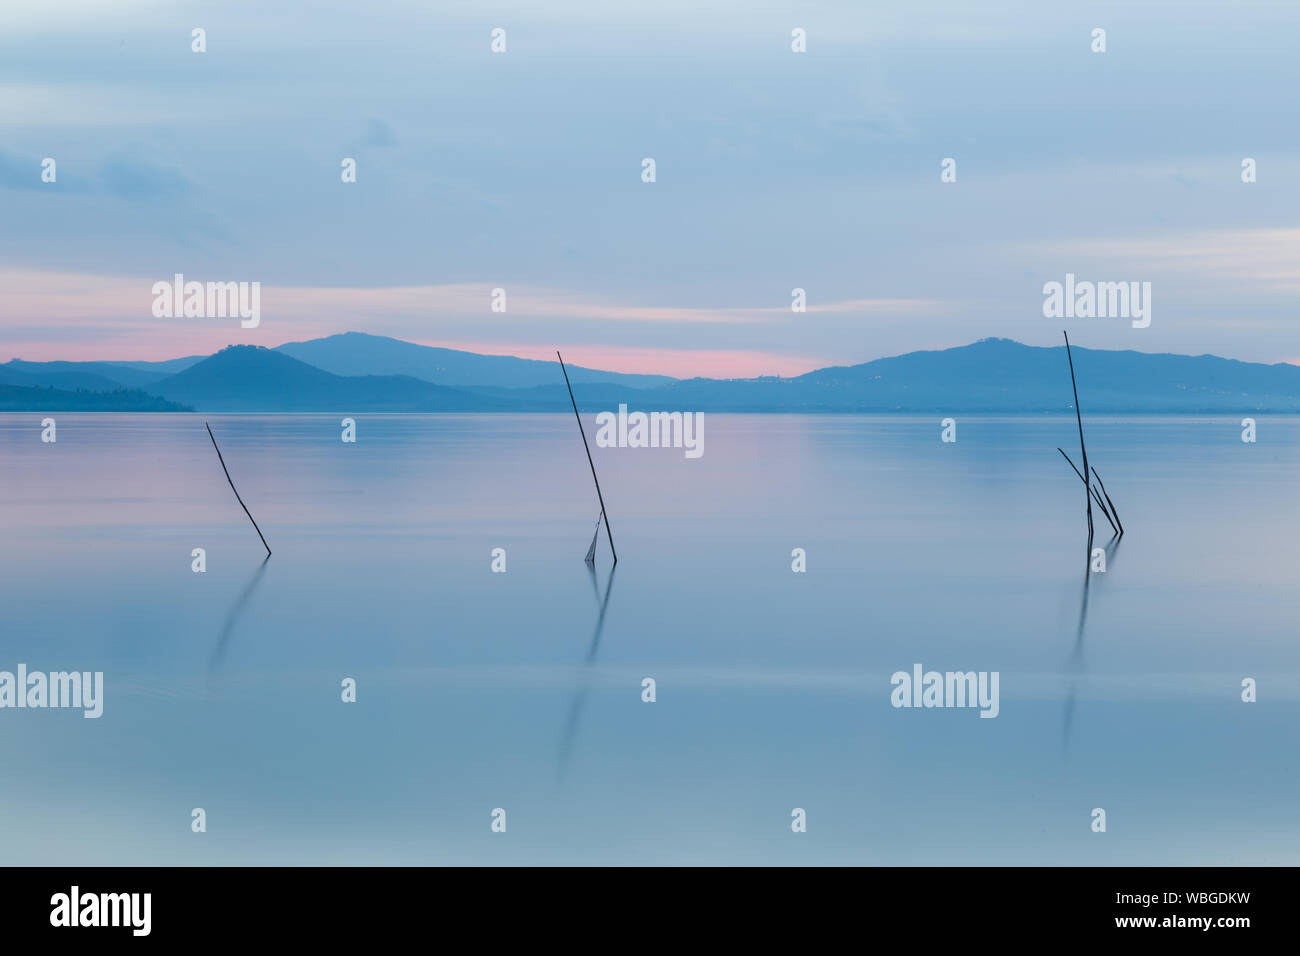 https://c8.alamy.com/comp/WBGDKW/sunset-a-trasimeno-lake-umbria-italy-with-fishing-net-poles-on-the-foreground-WBGDKW.jpg